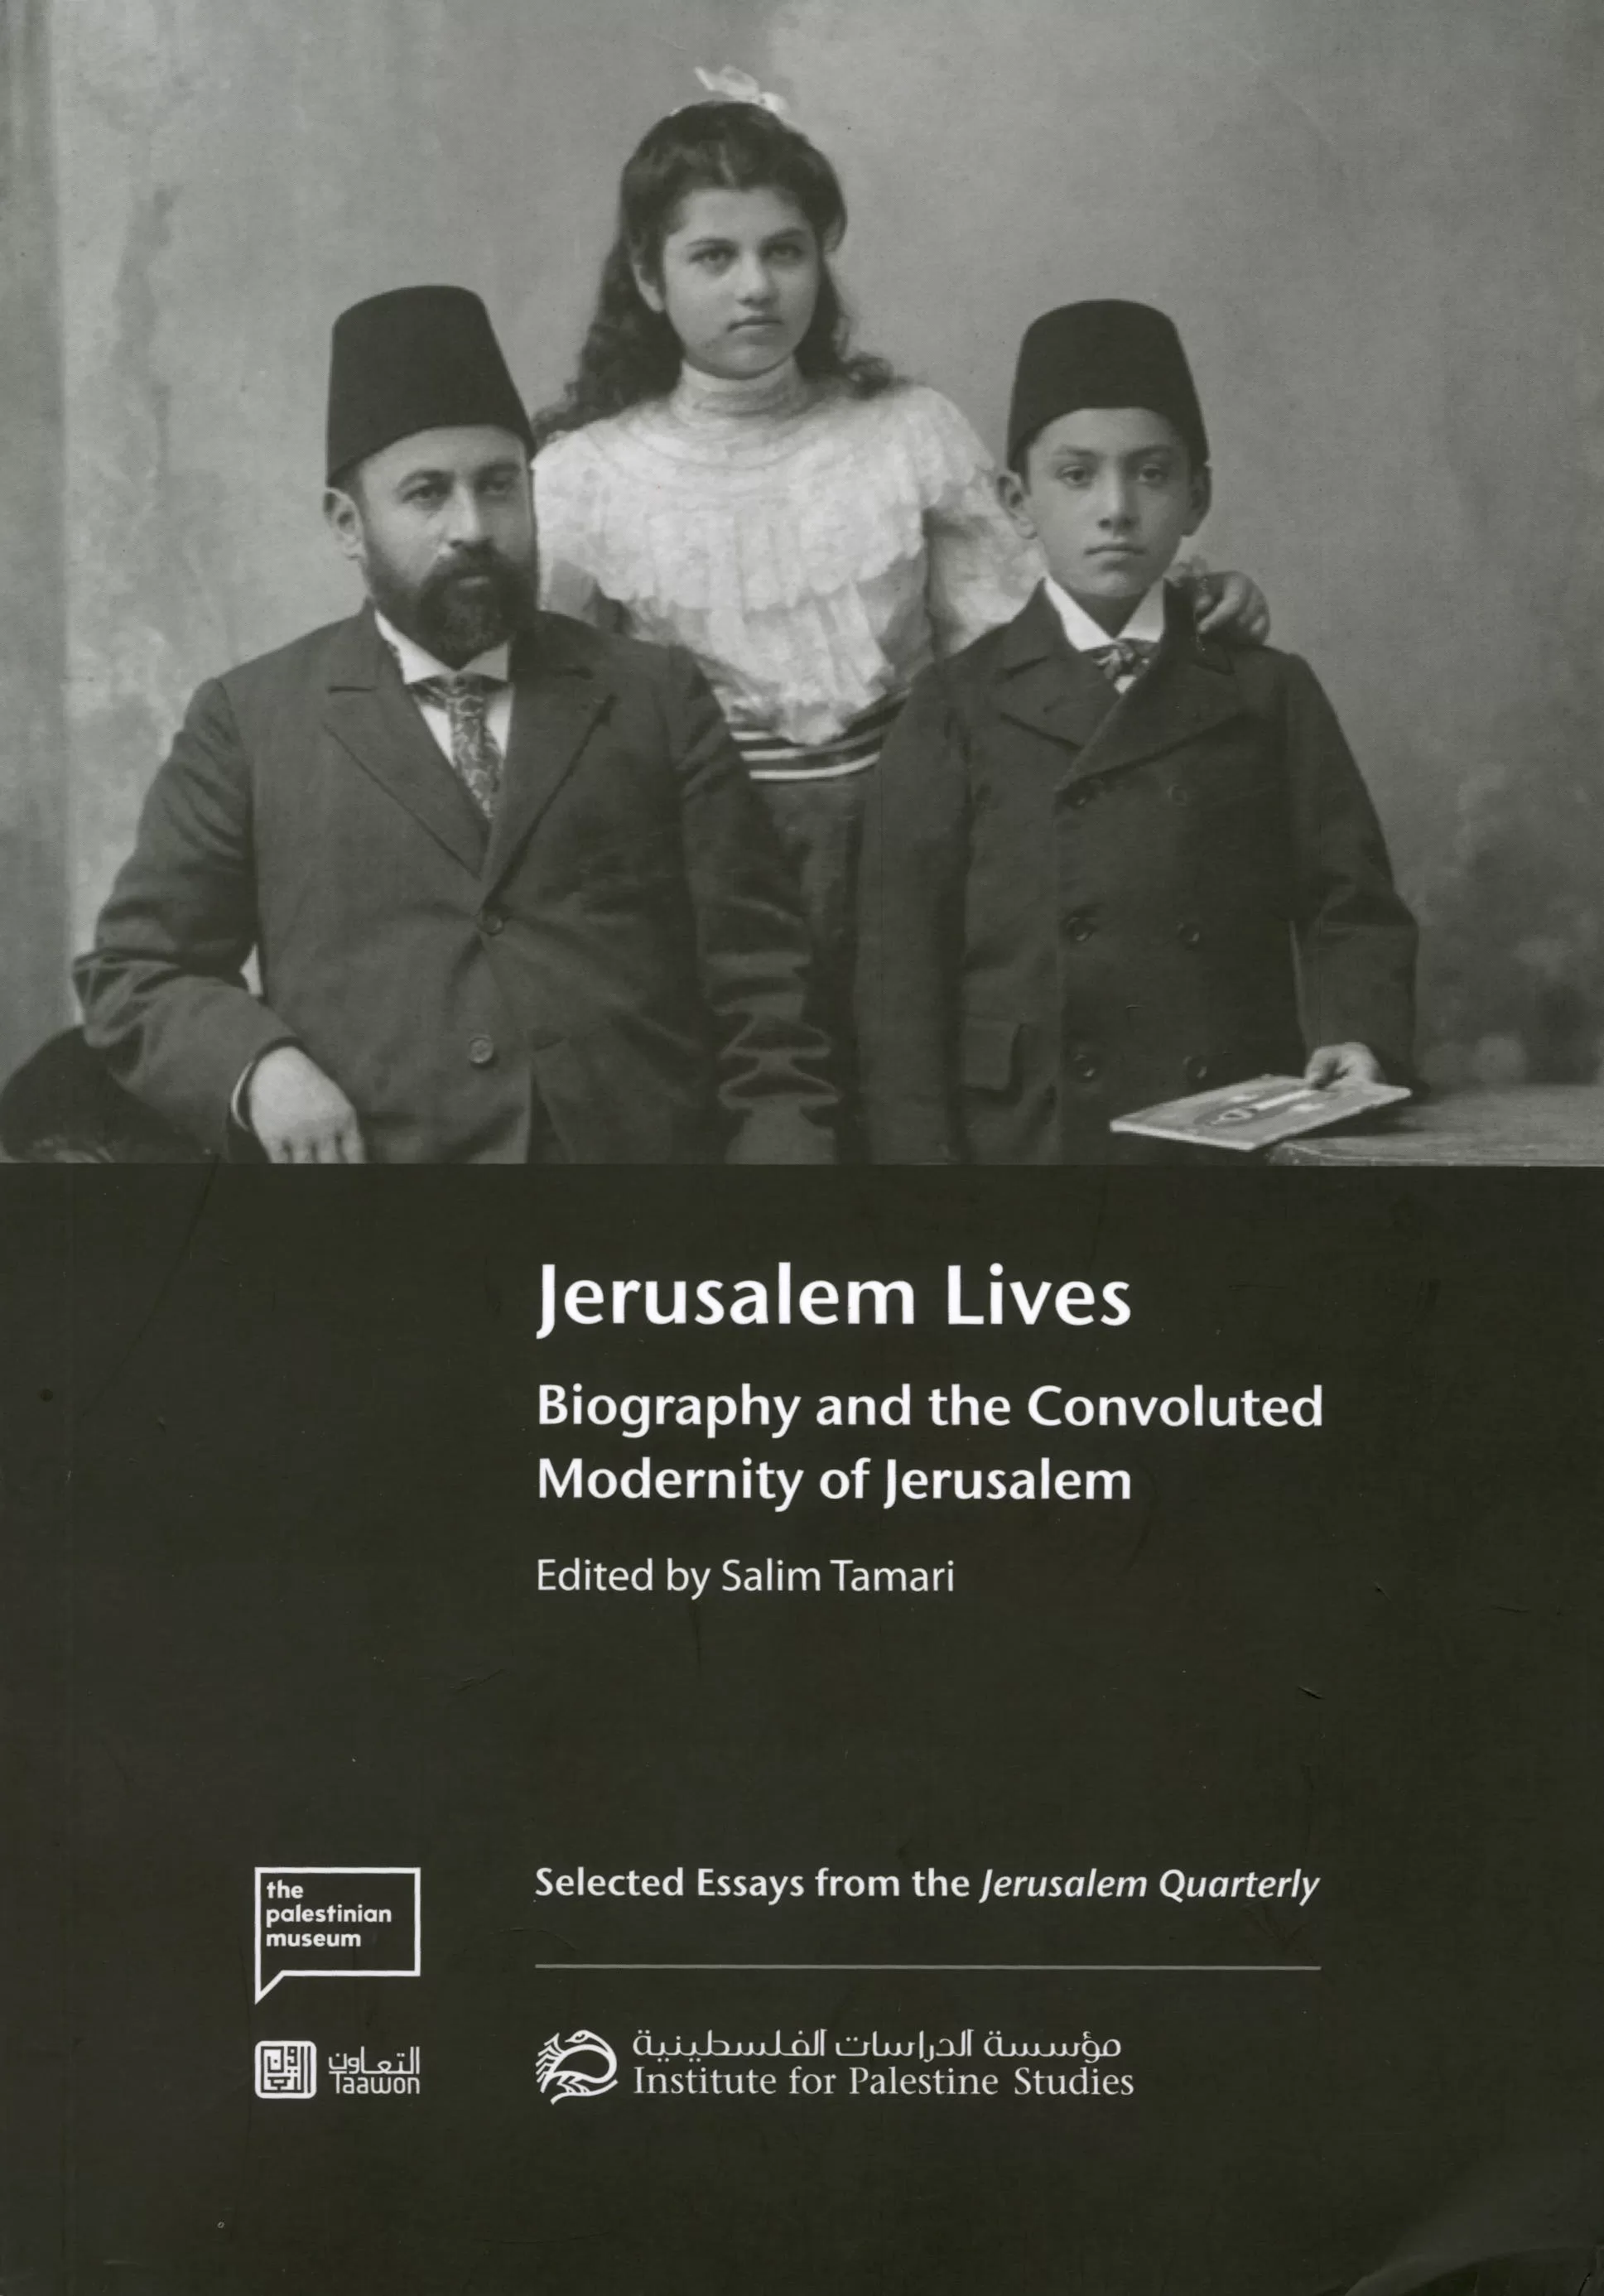 Book cover "Jerusalem Lives (Biography and the Convoluted Modernity of Jerusalem)"